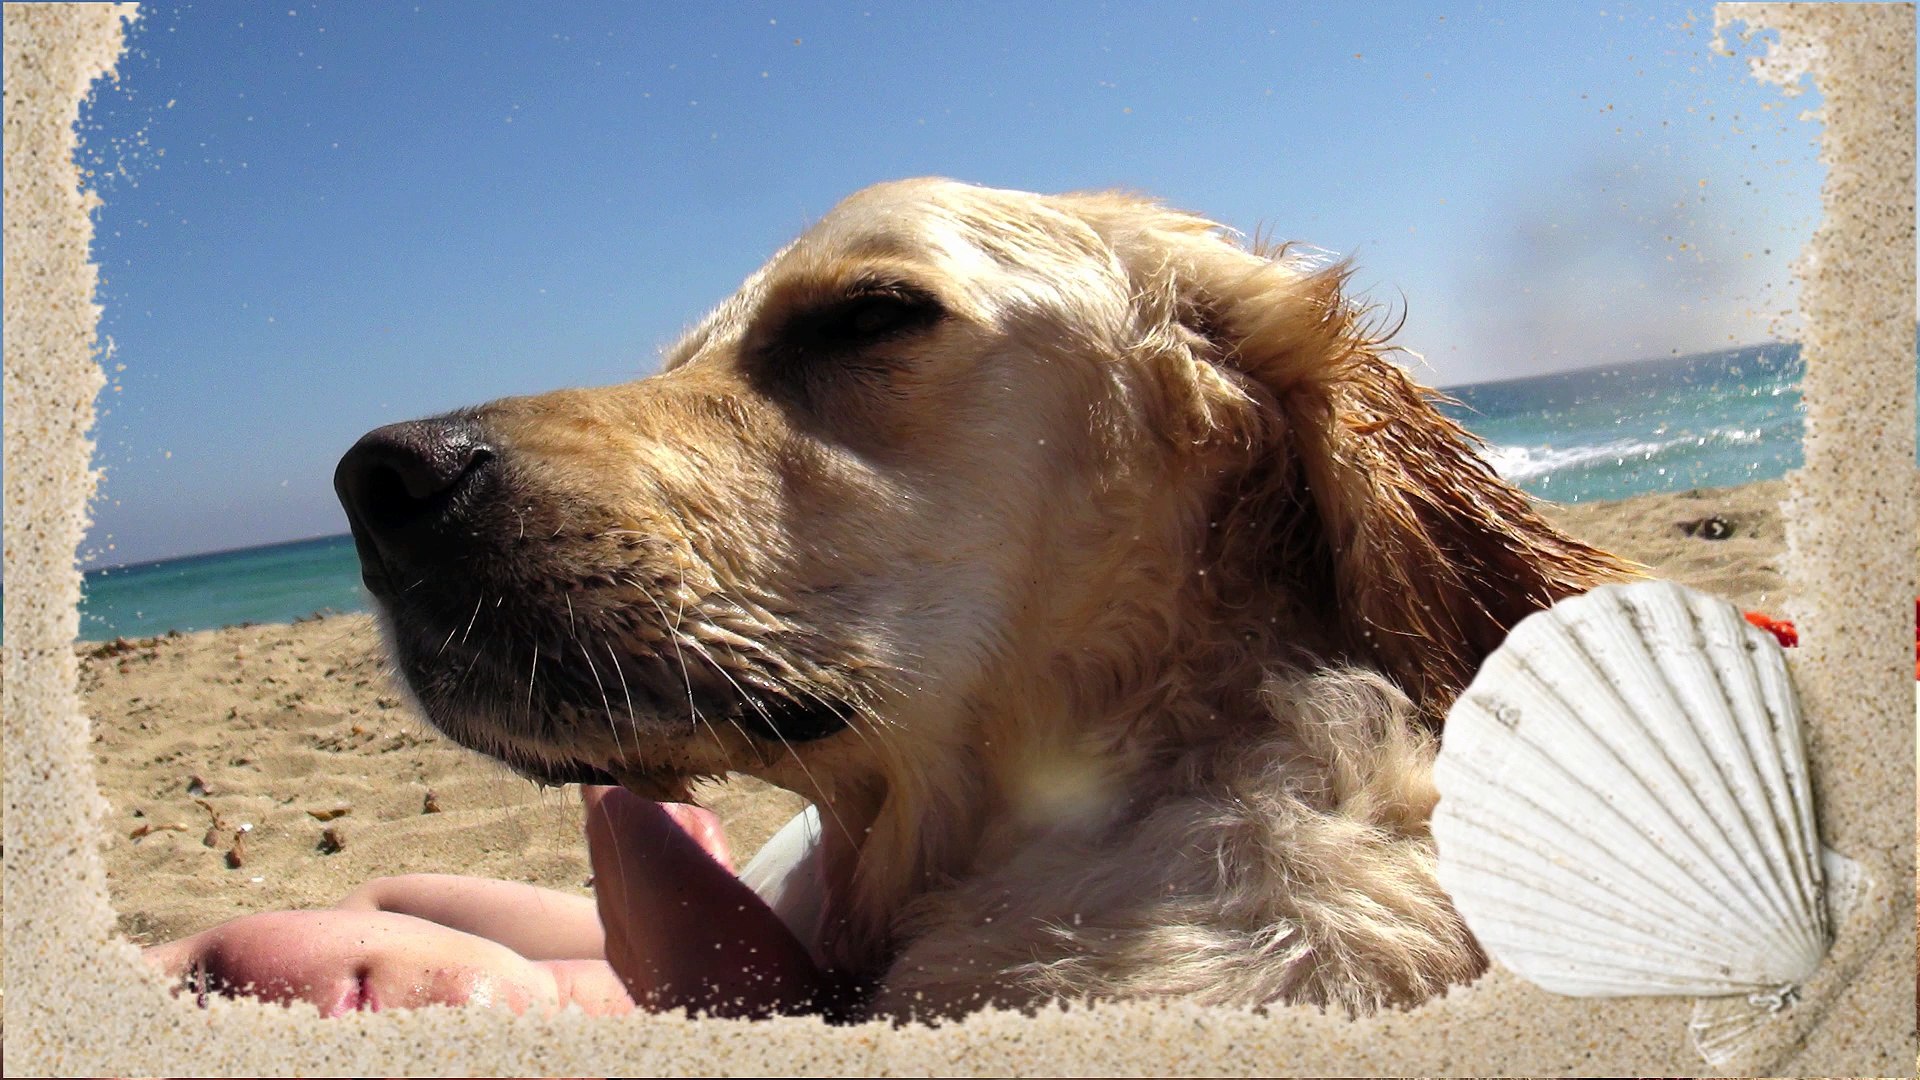 Golden Retriever montage: Kobie's Beach Day